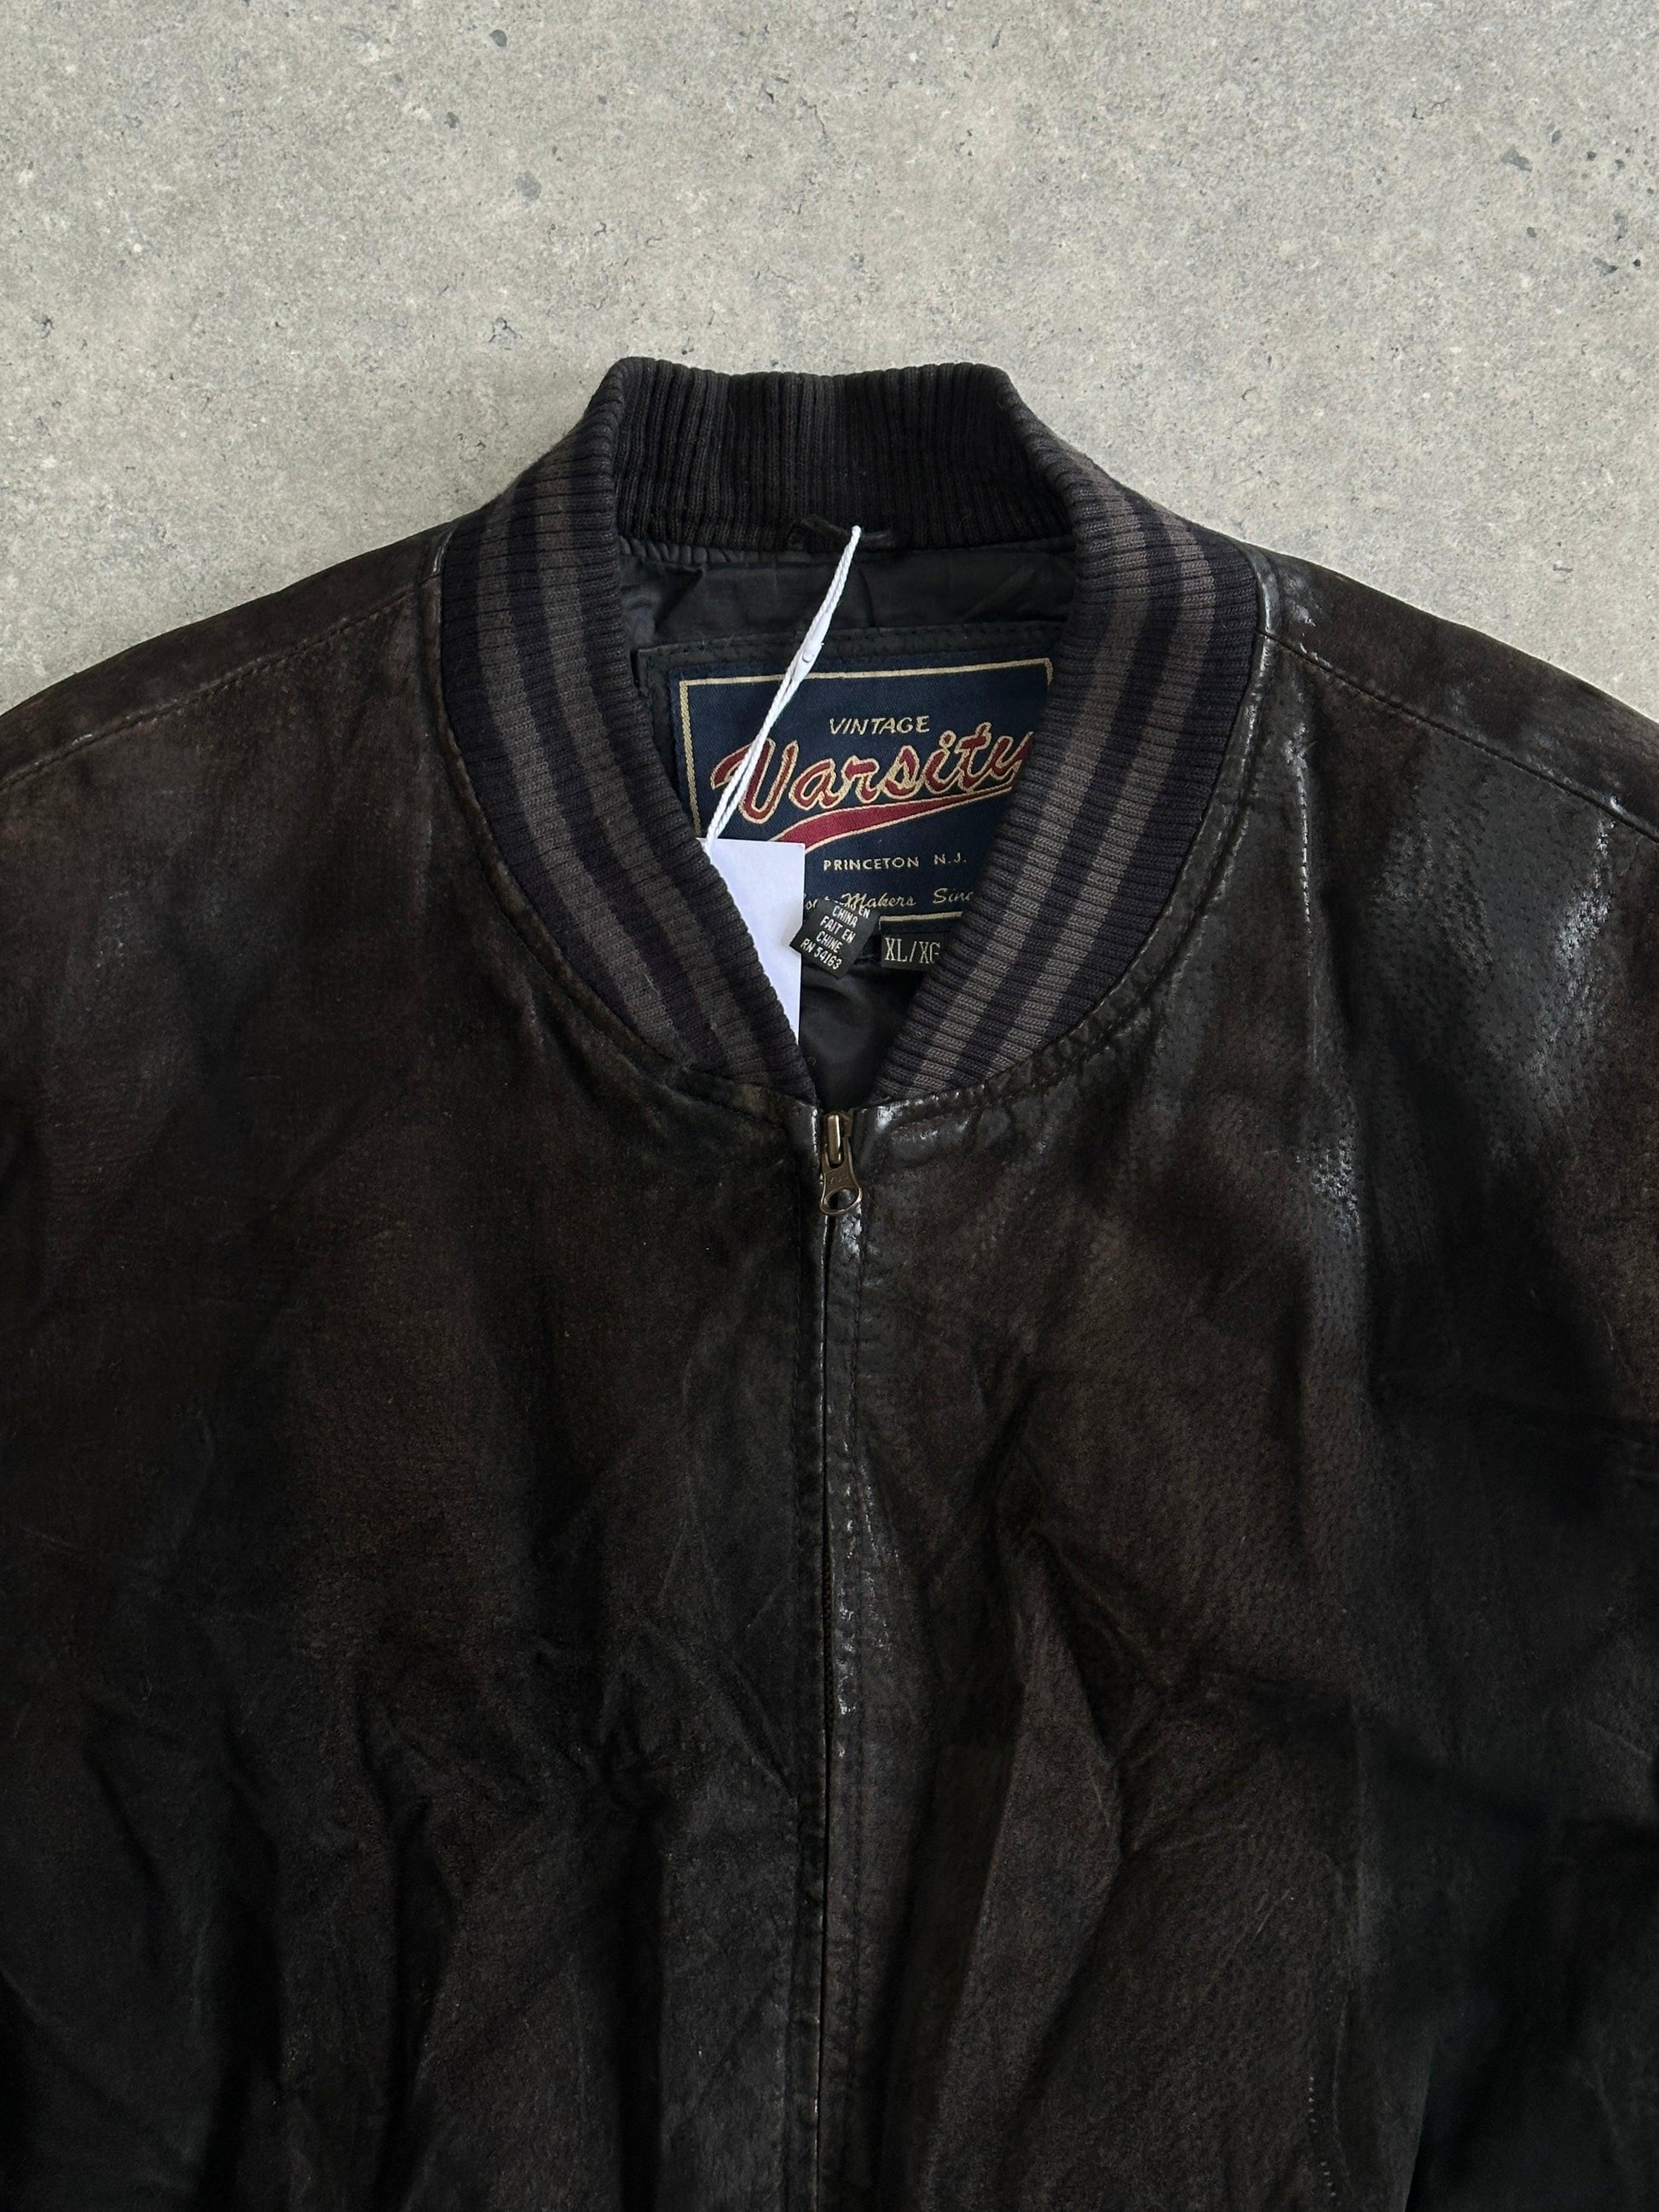 Vintage Varsity Nubuck Leather Jacket - XL - Known Source